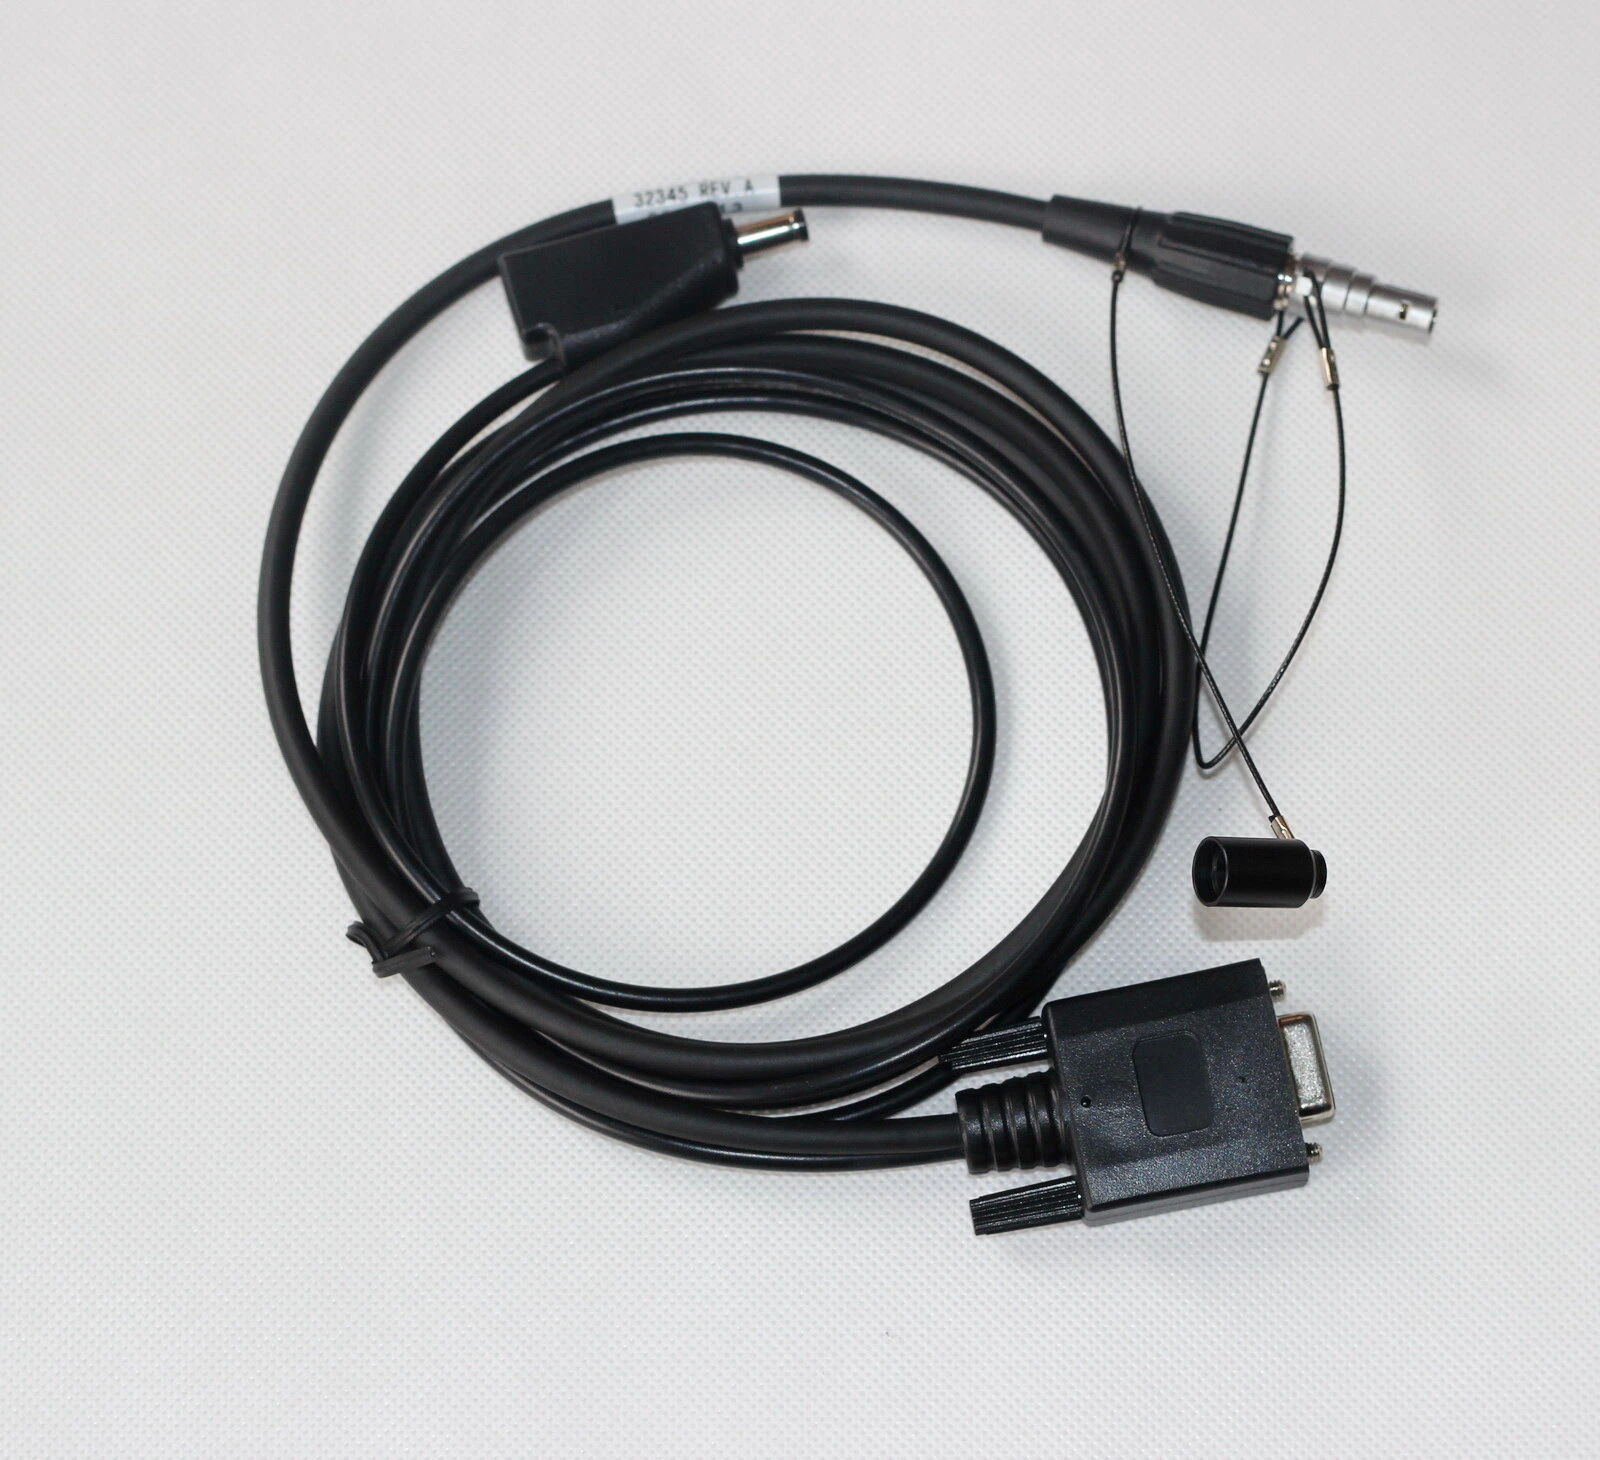 NEW Trimble 32345 /59044 Power cable data cable for Trimble 5700/5800//R6/R7/R8|Instrument Parts & Accessories| - AliExpress